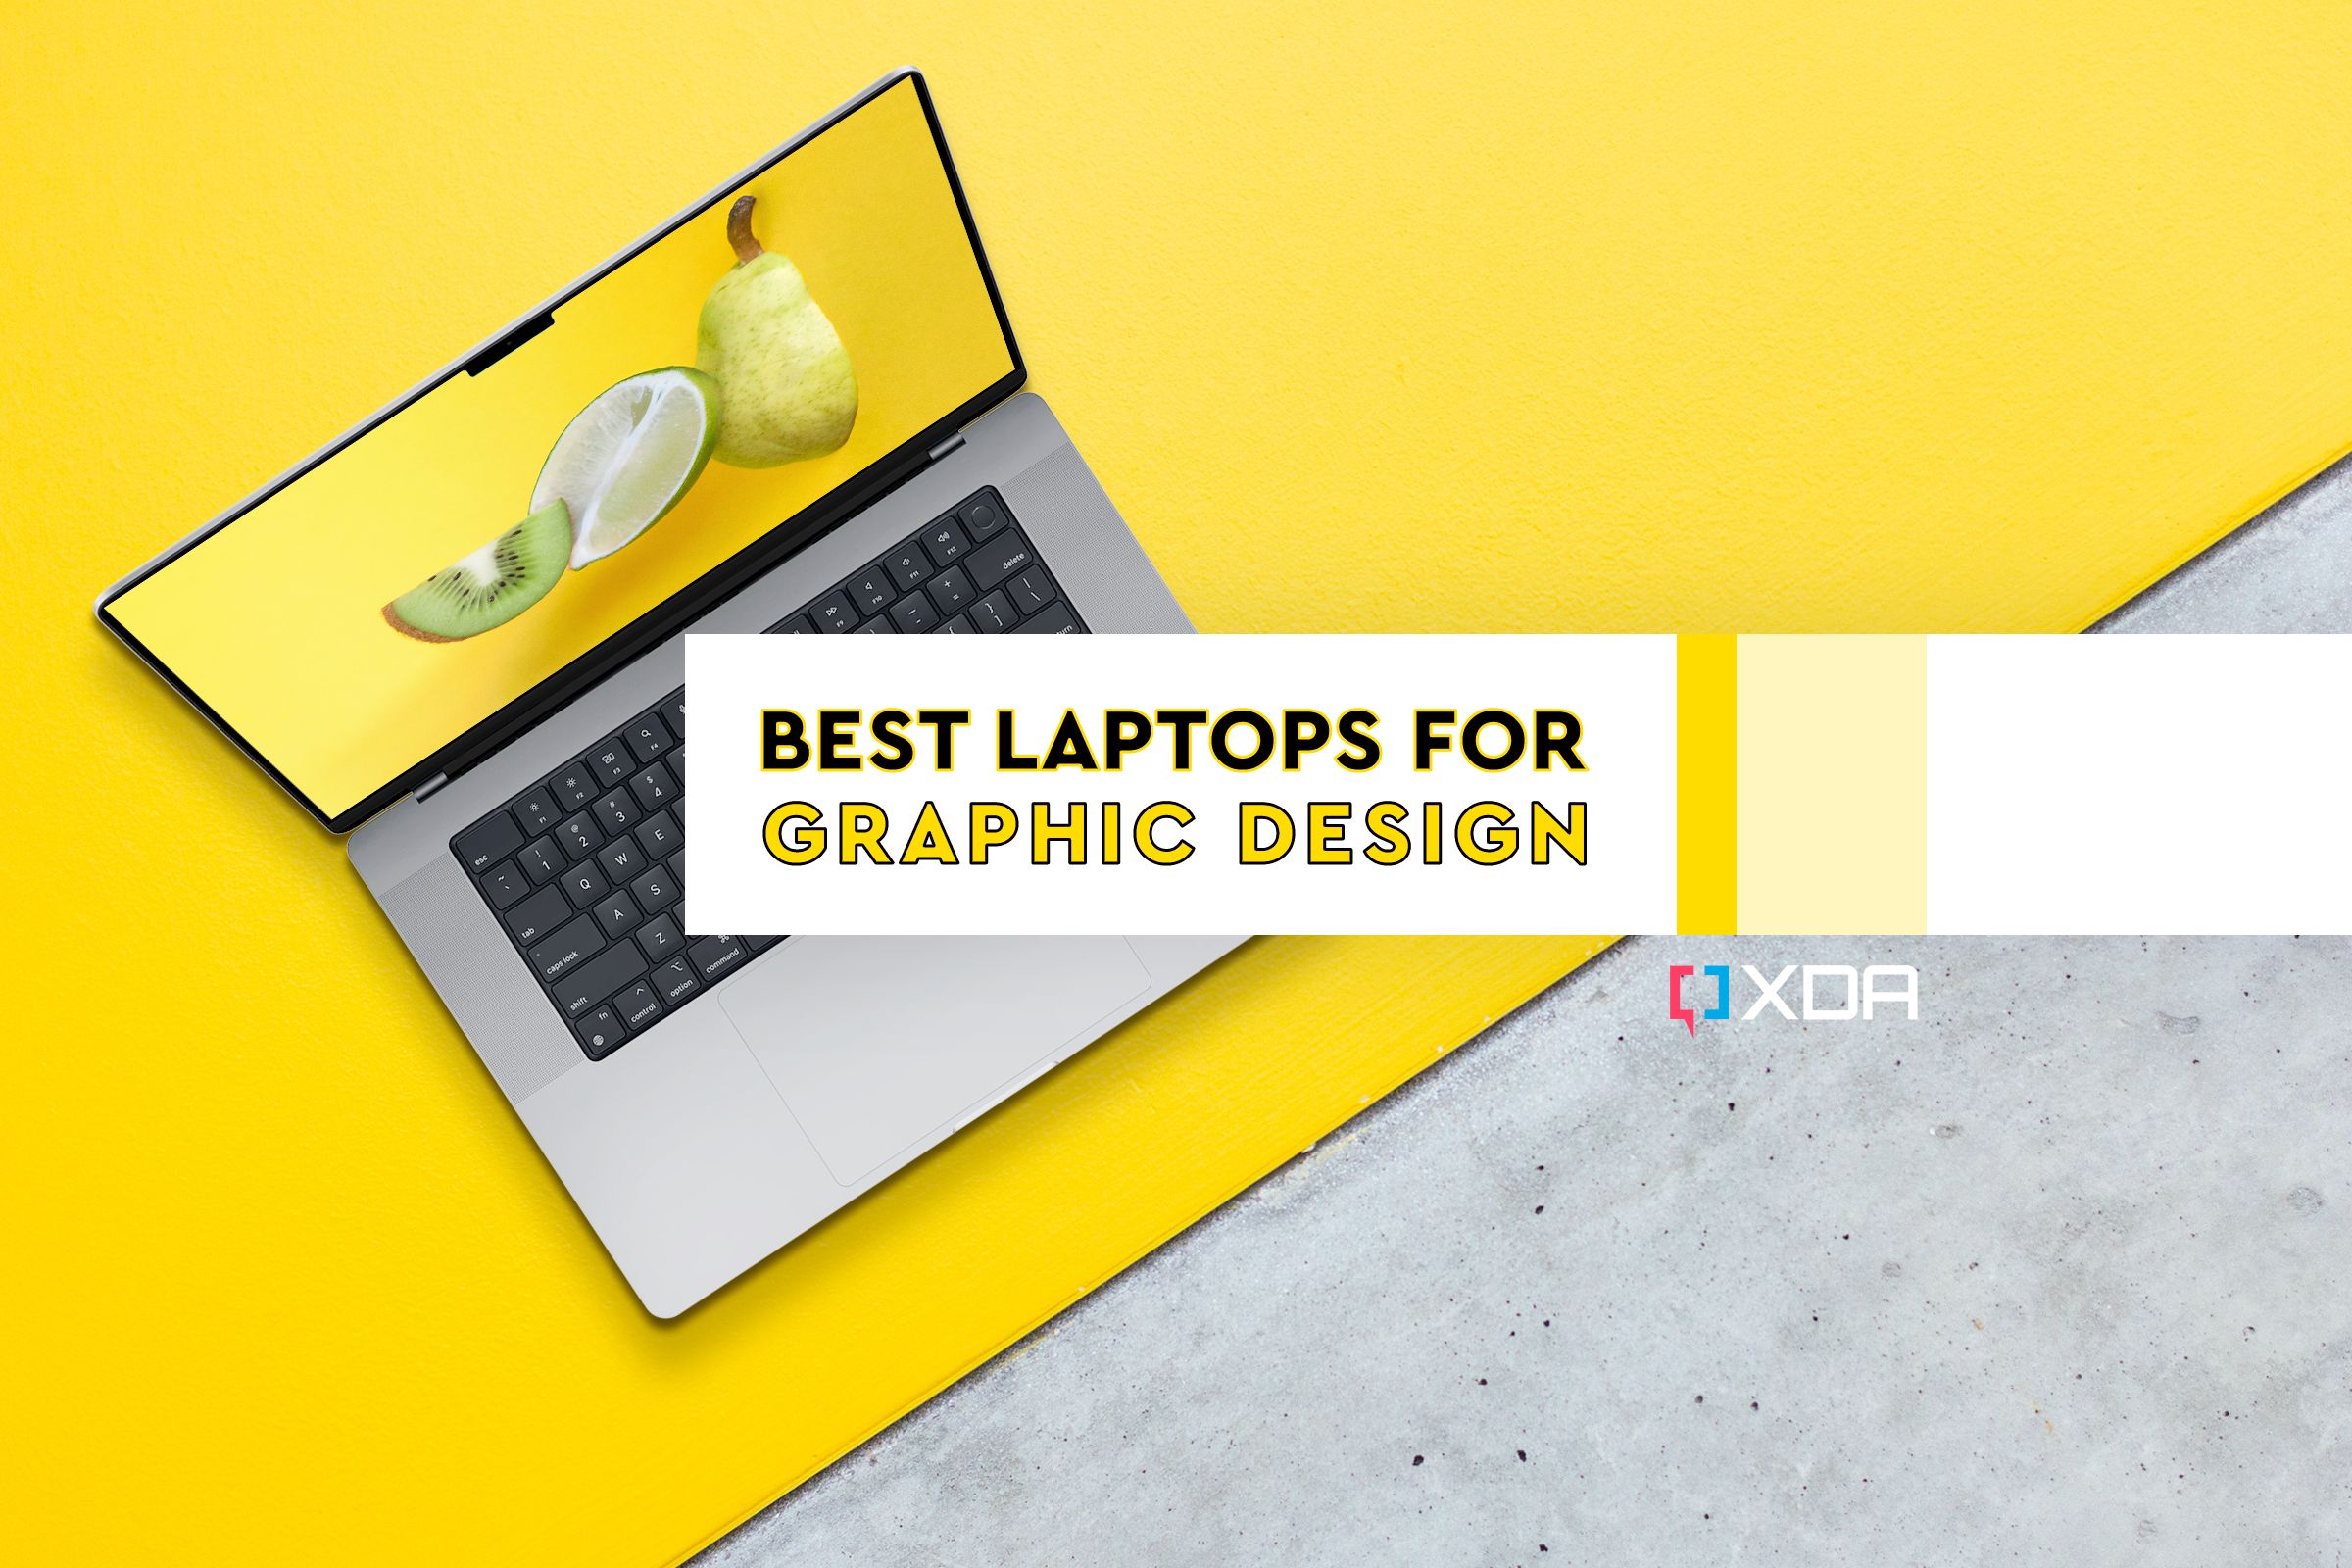 Best laptops for graphic design